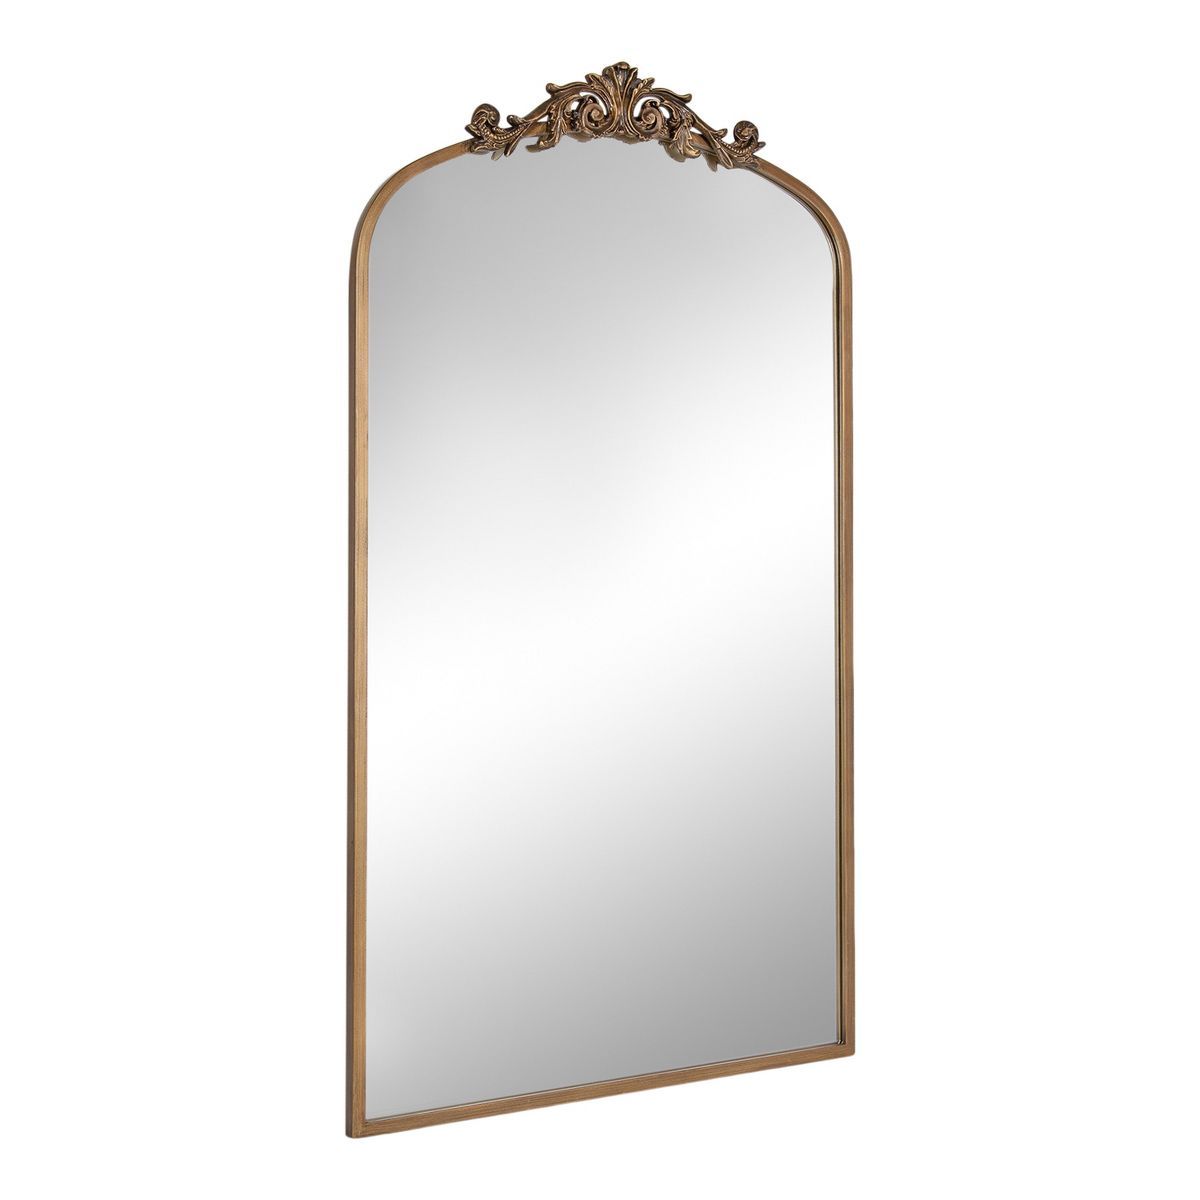 Kate and Laurel Arendahl Full Length Mirror - Gold, 24x42 | Target